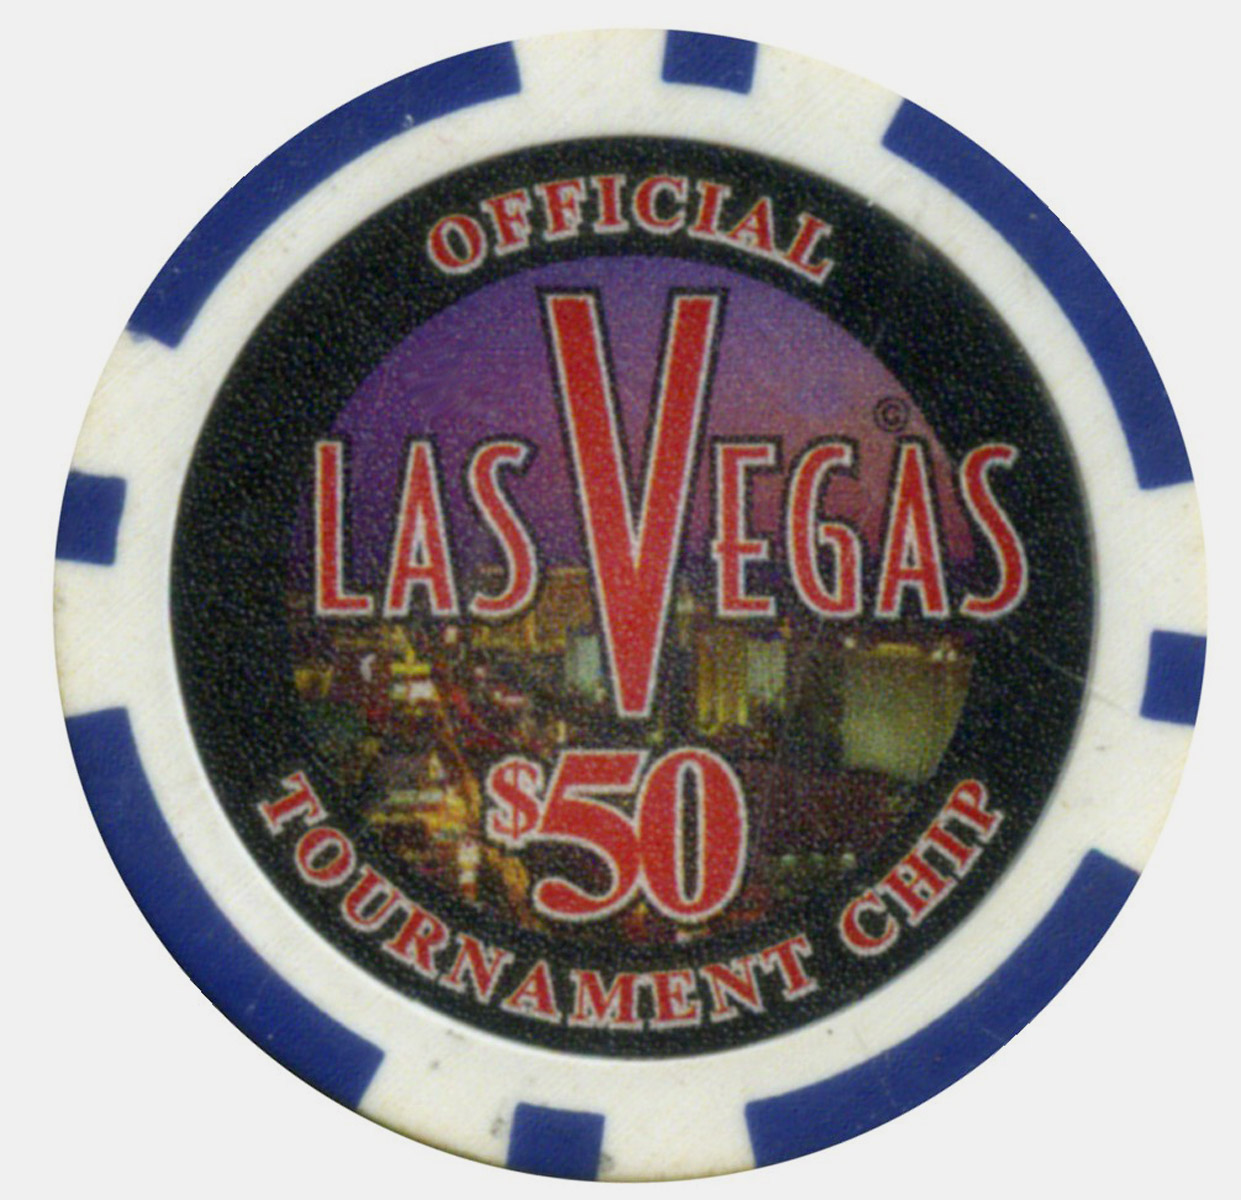 Las Vegas Official Tournament Chip $50 Fantasy Series - Chipper Club